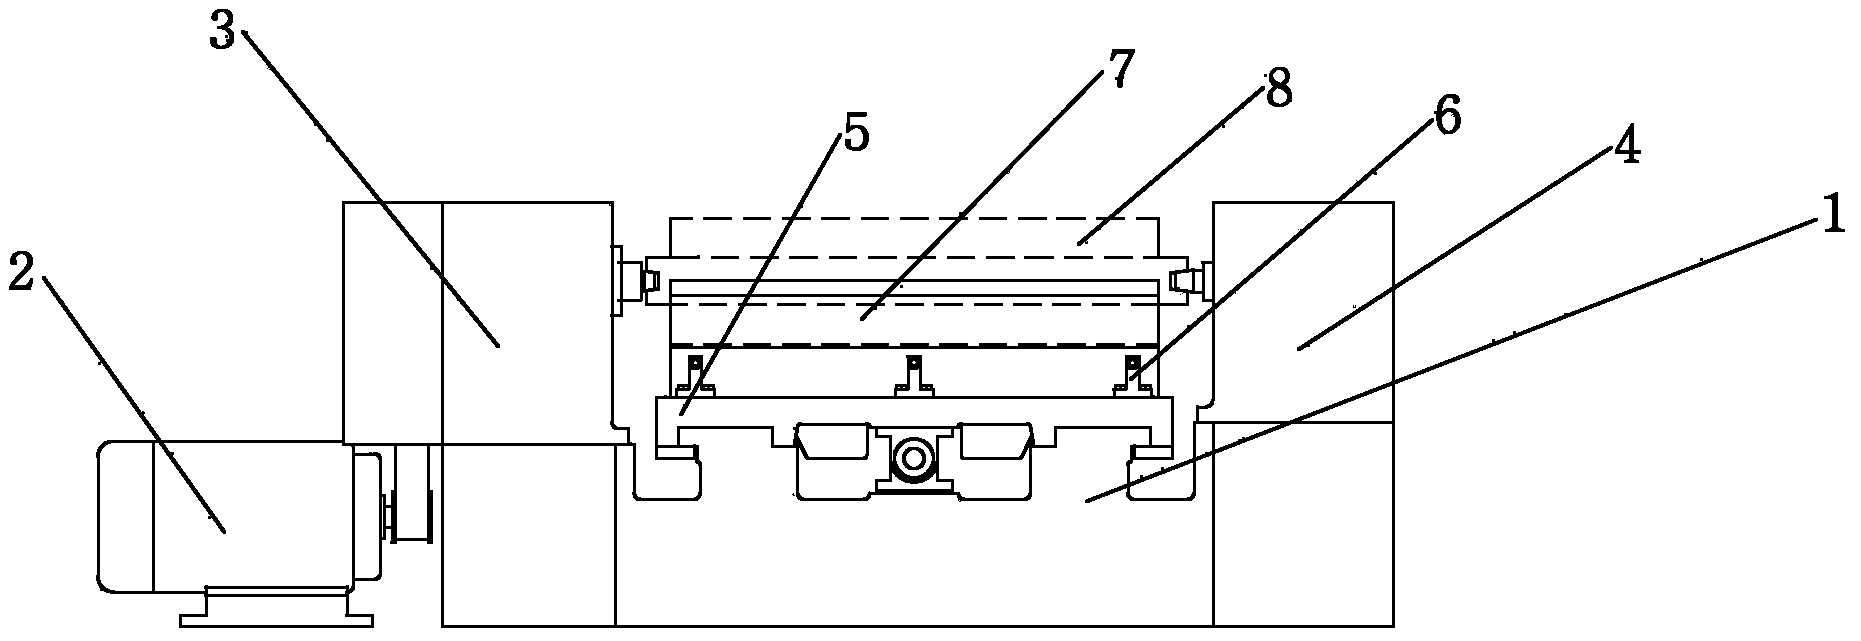 Numerical control film rotary cutter